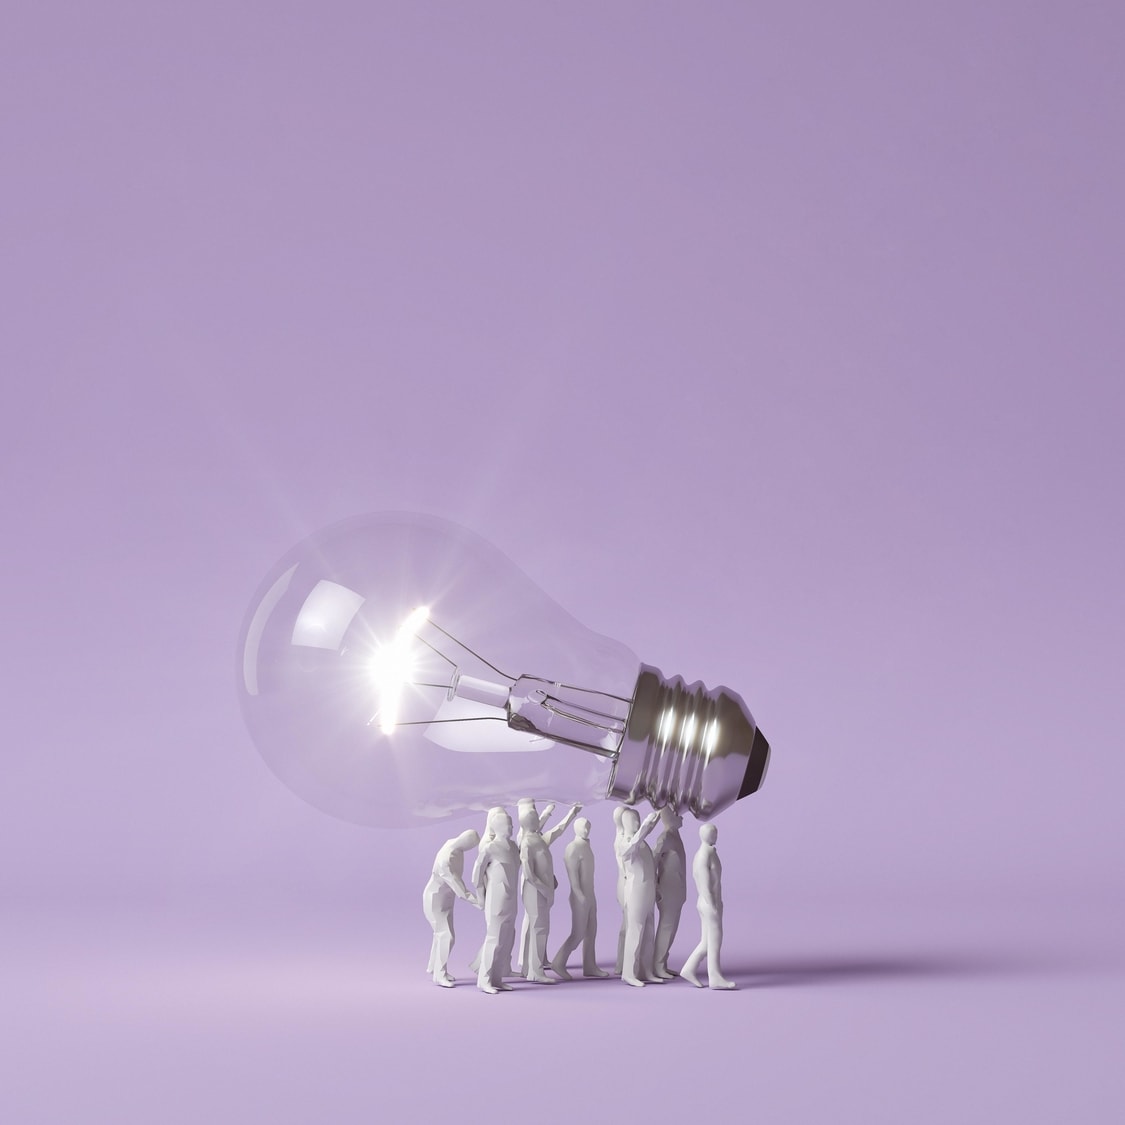 Lightbulb Human Figurines Carrying Idea Ideation 3D